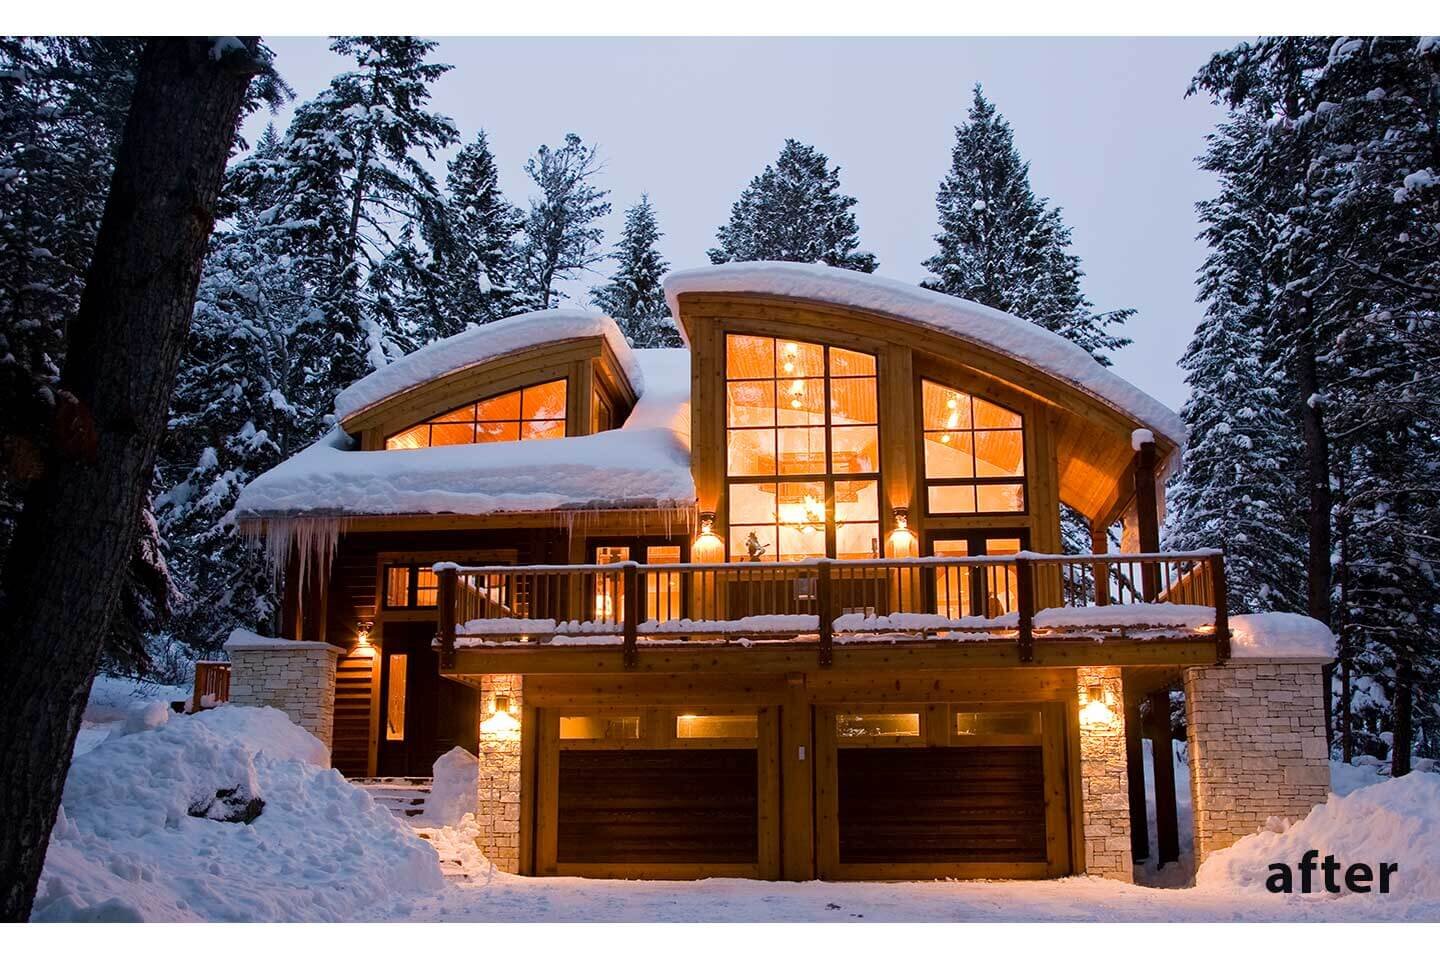 Ski lodge in winter after remodel-addition